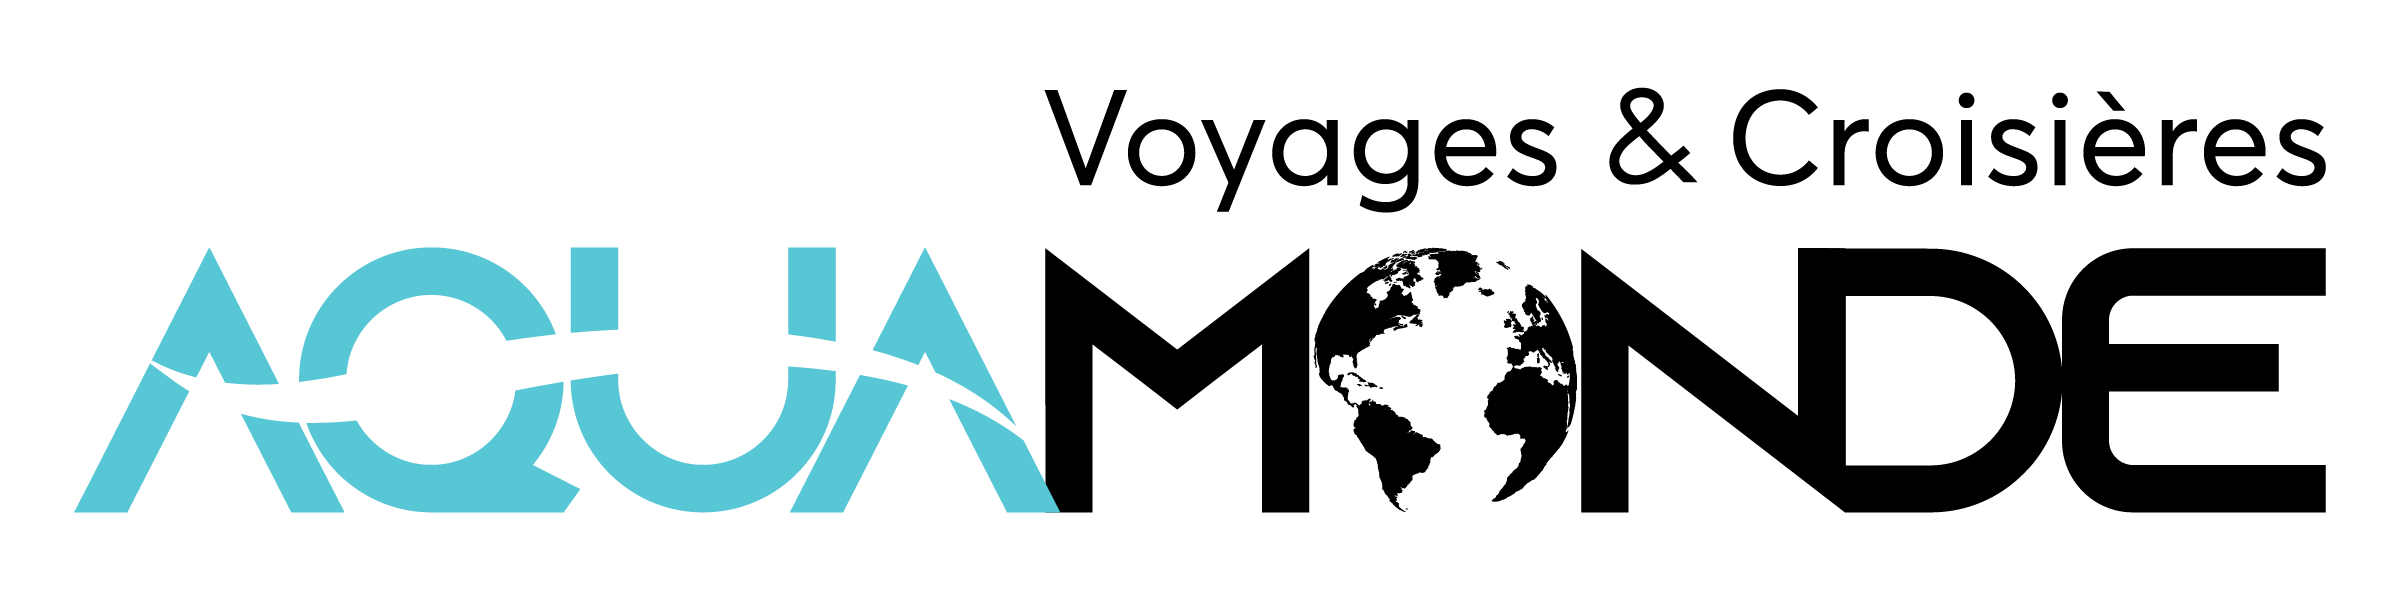 AQUAMONDE logo principal